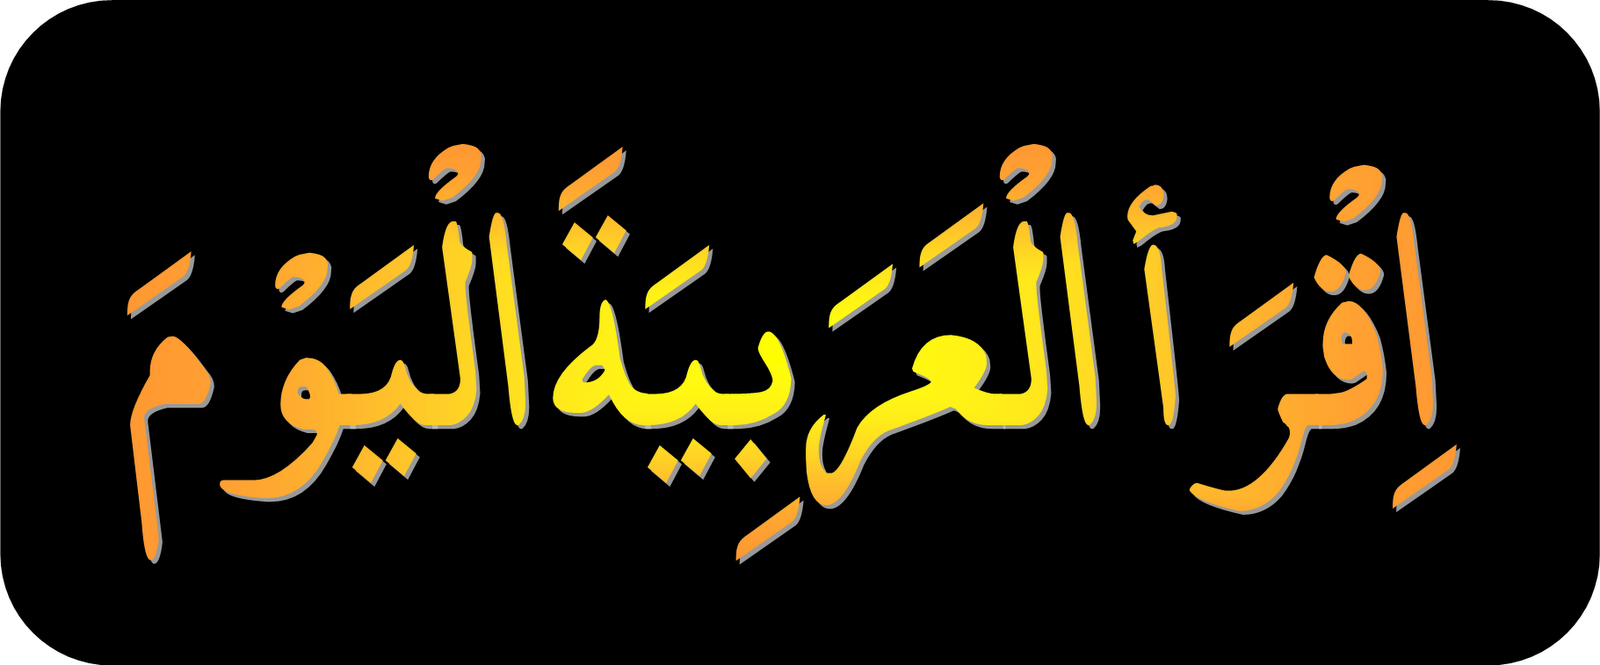 Al quran in arabic writing